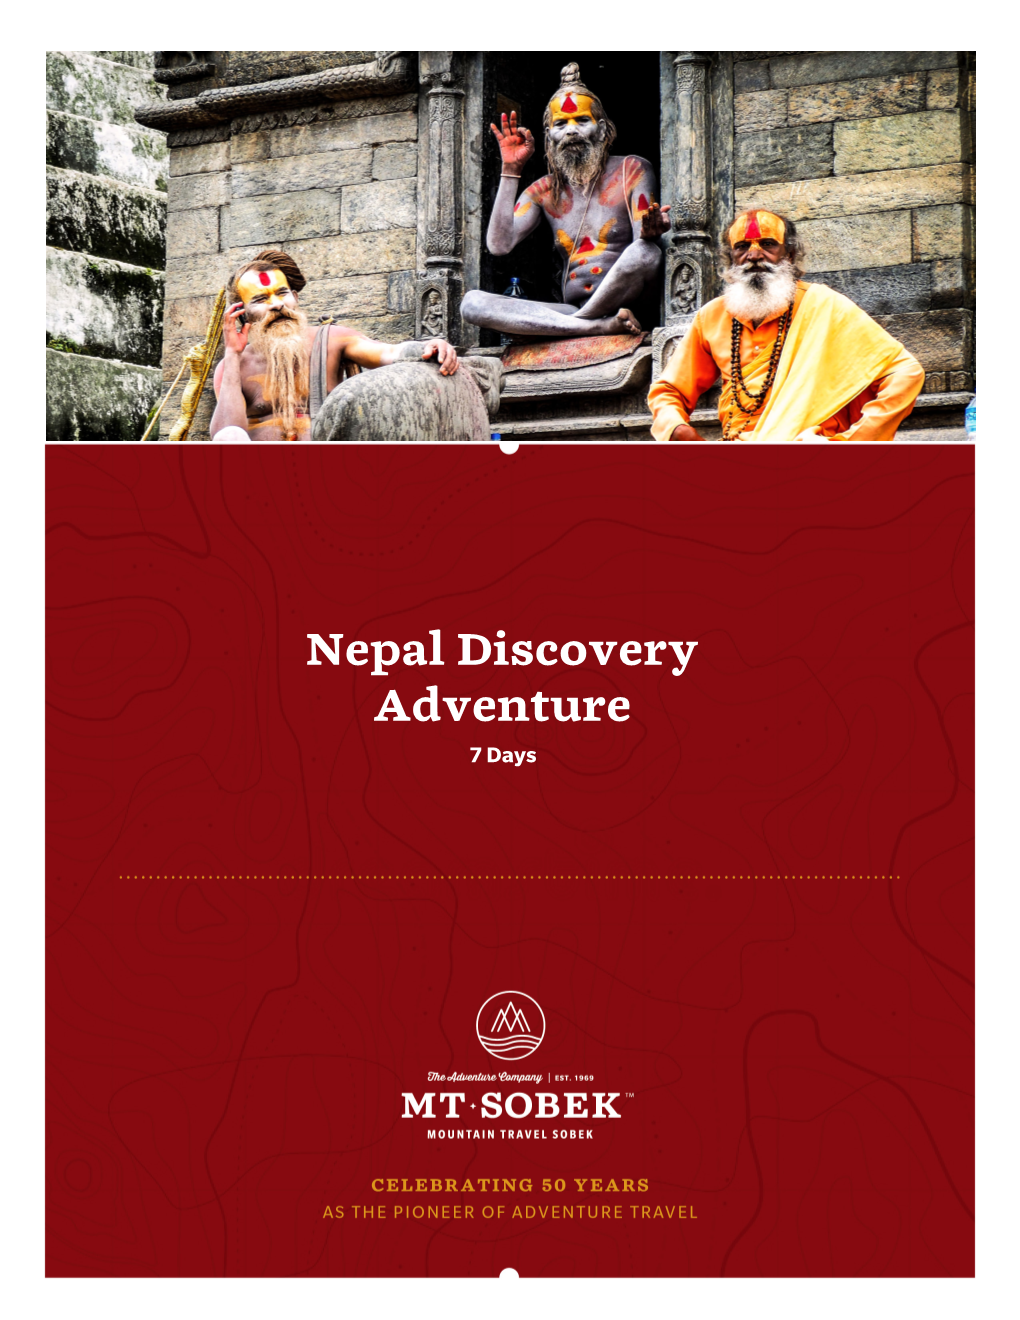 Nepal Discovery Adventure 7 Days Nepal Discovery Adventure